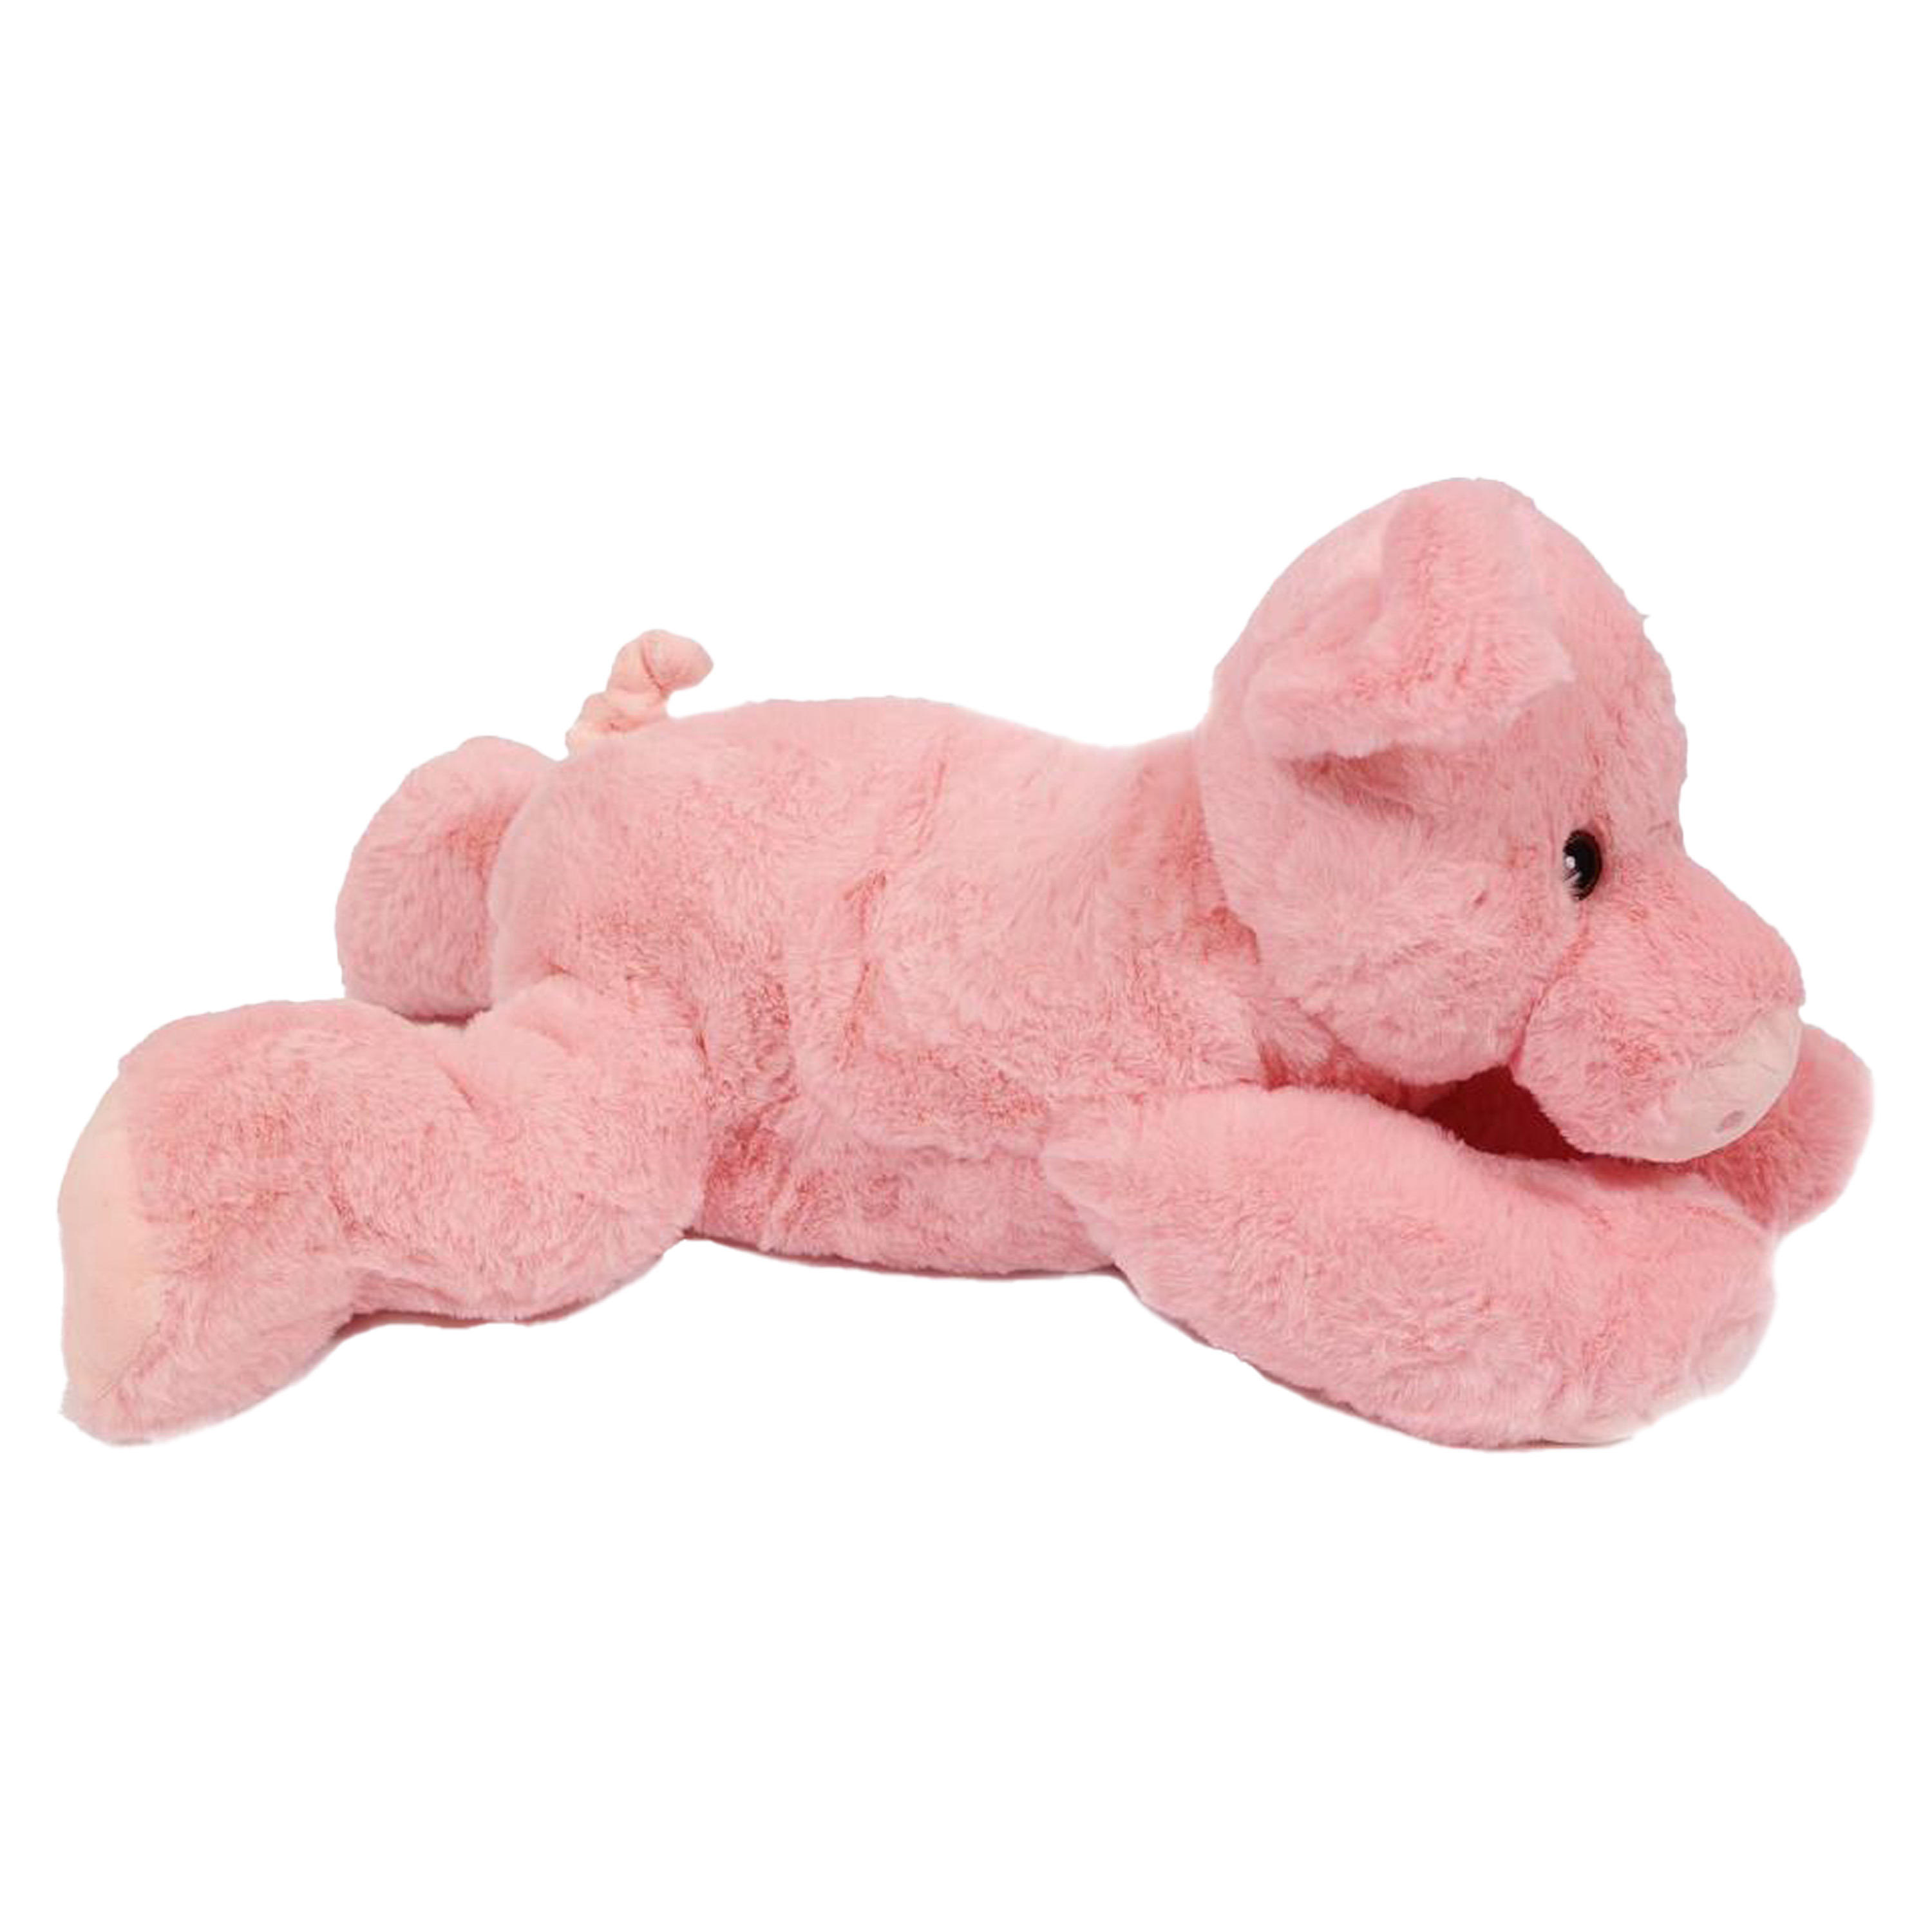 Pia Toys Knuffeldier Varken-biggetje roze pluche stof premium kwaliteit knuffels 50 cm